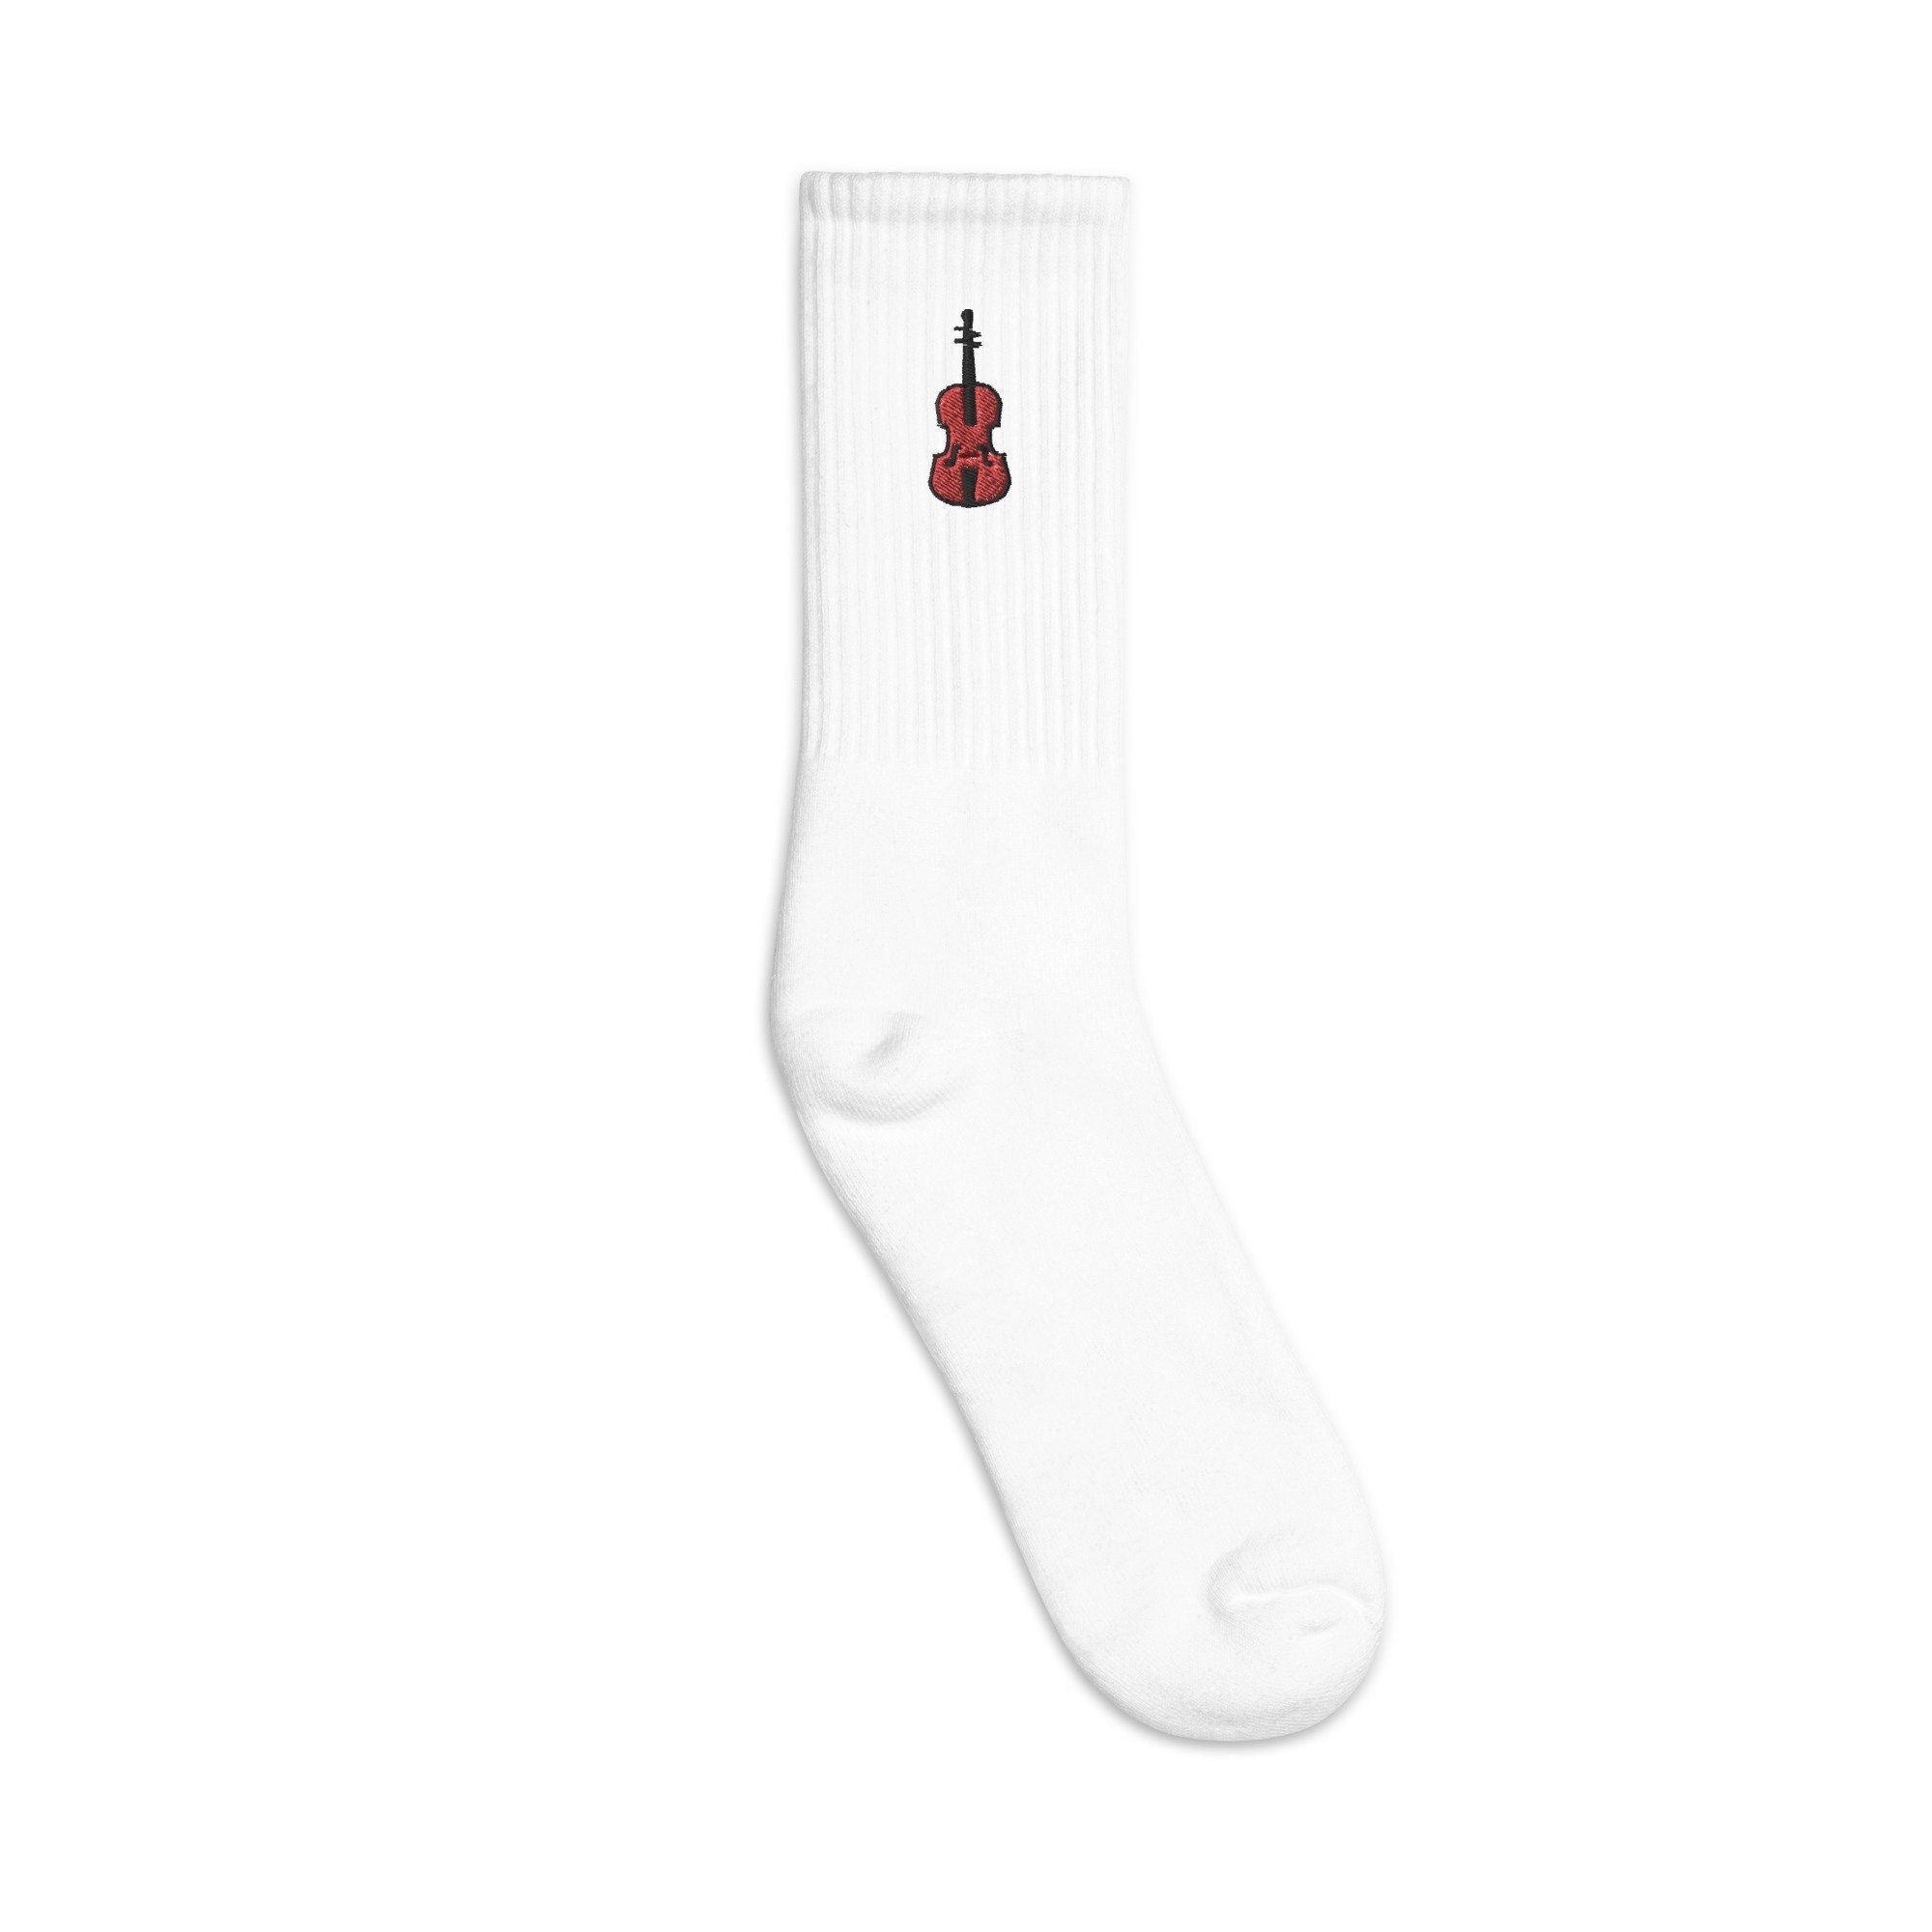 Cello Embroidered Socks, Premium Embroidered Socks, Long Socks Gift - Multiple Colors